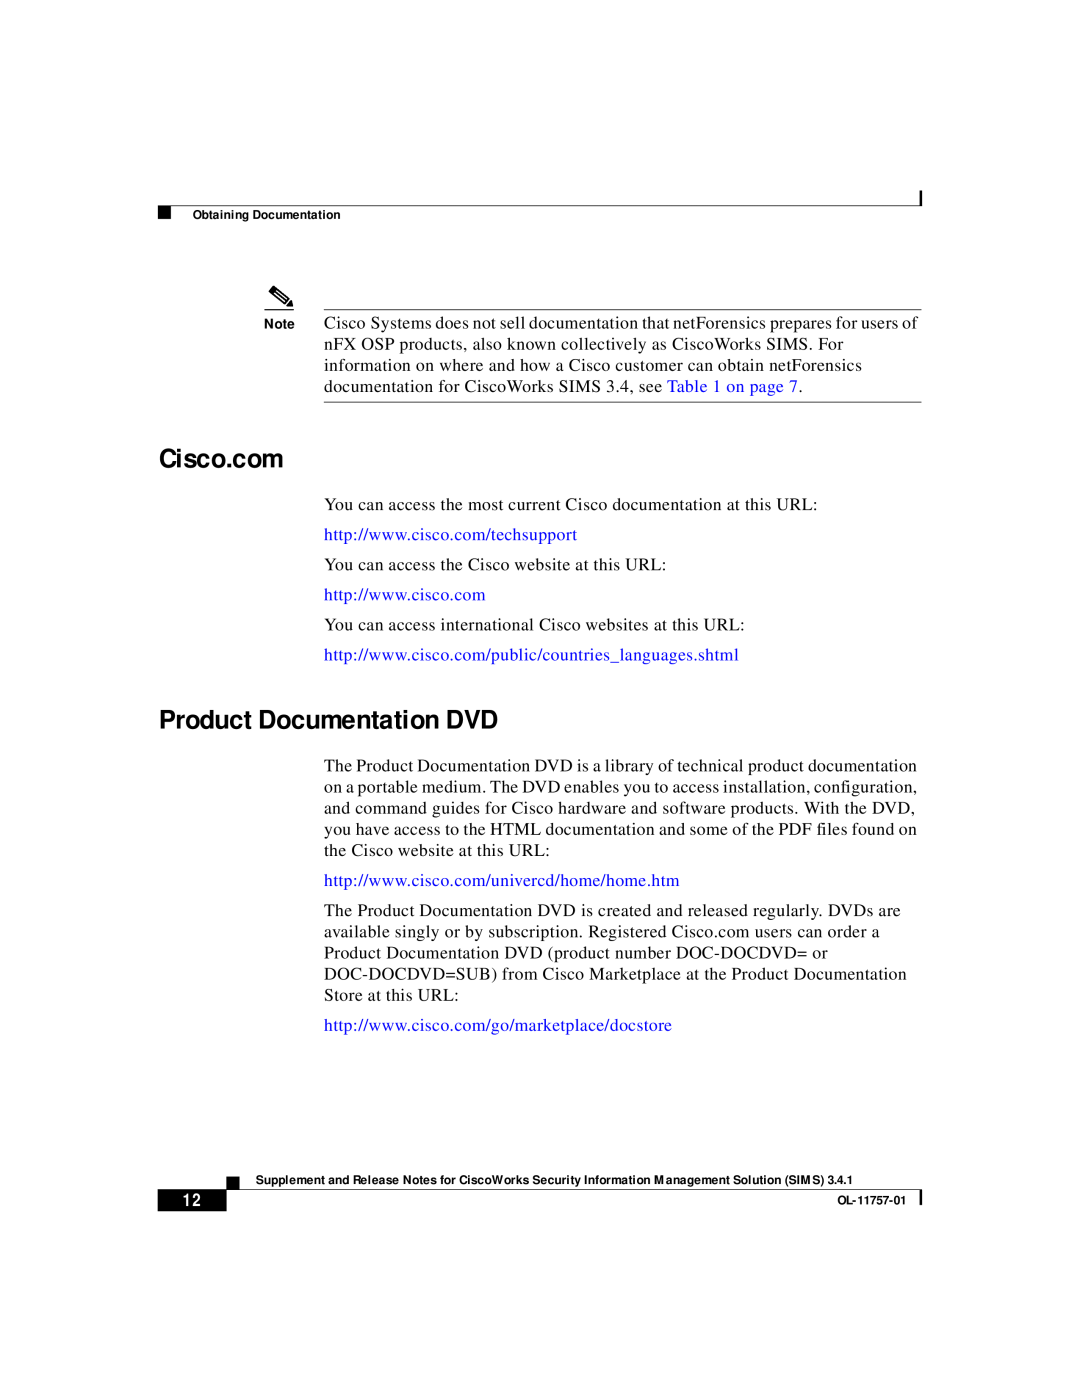 Cisco Systems OL-11757-01 manual Product Documentation DVD 